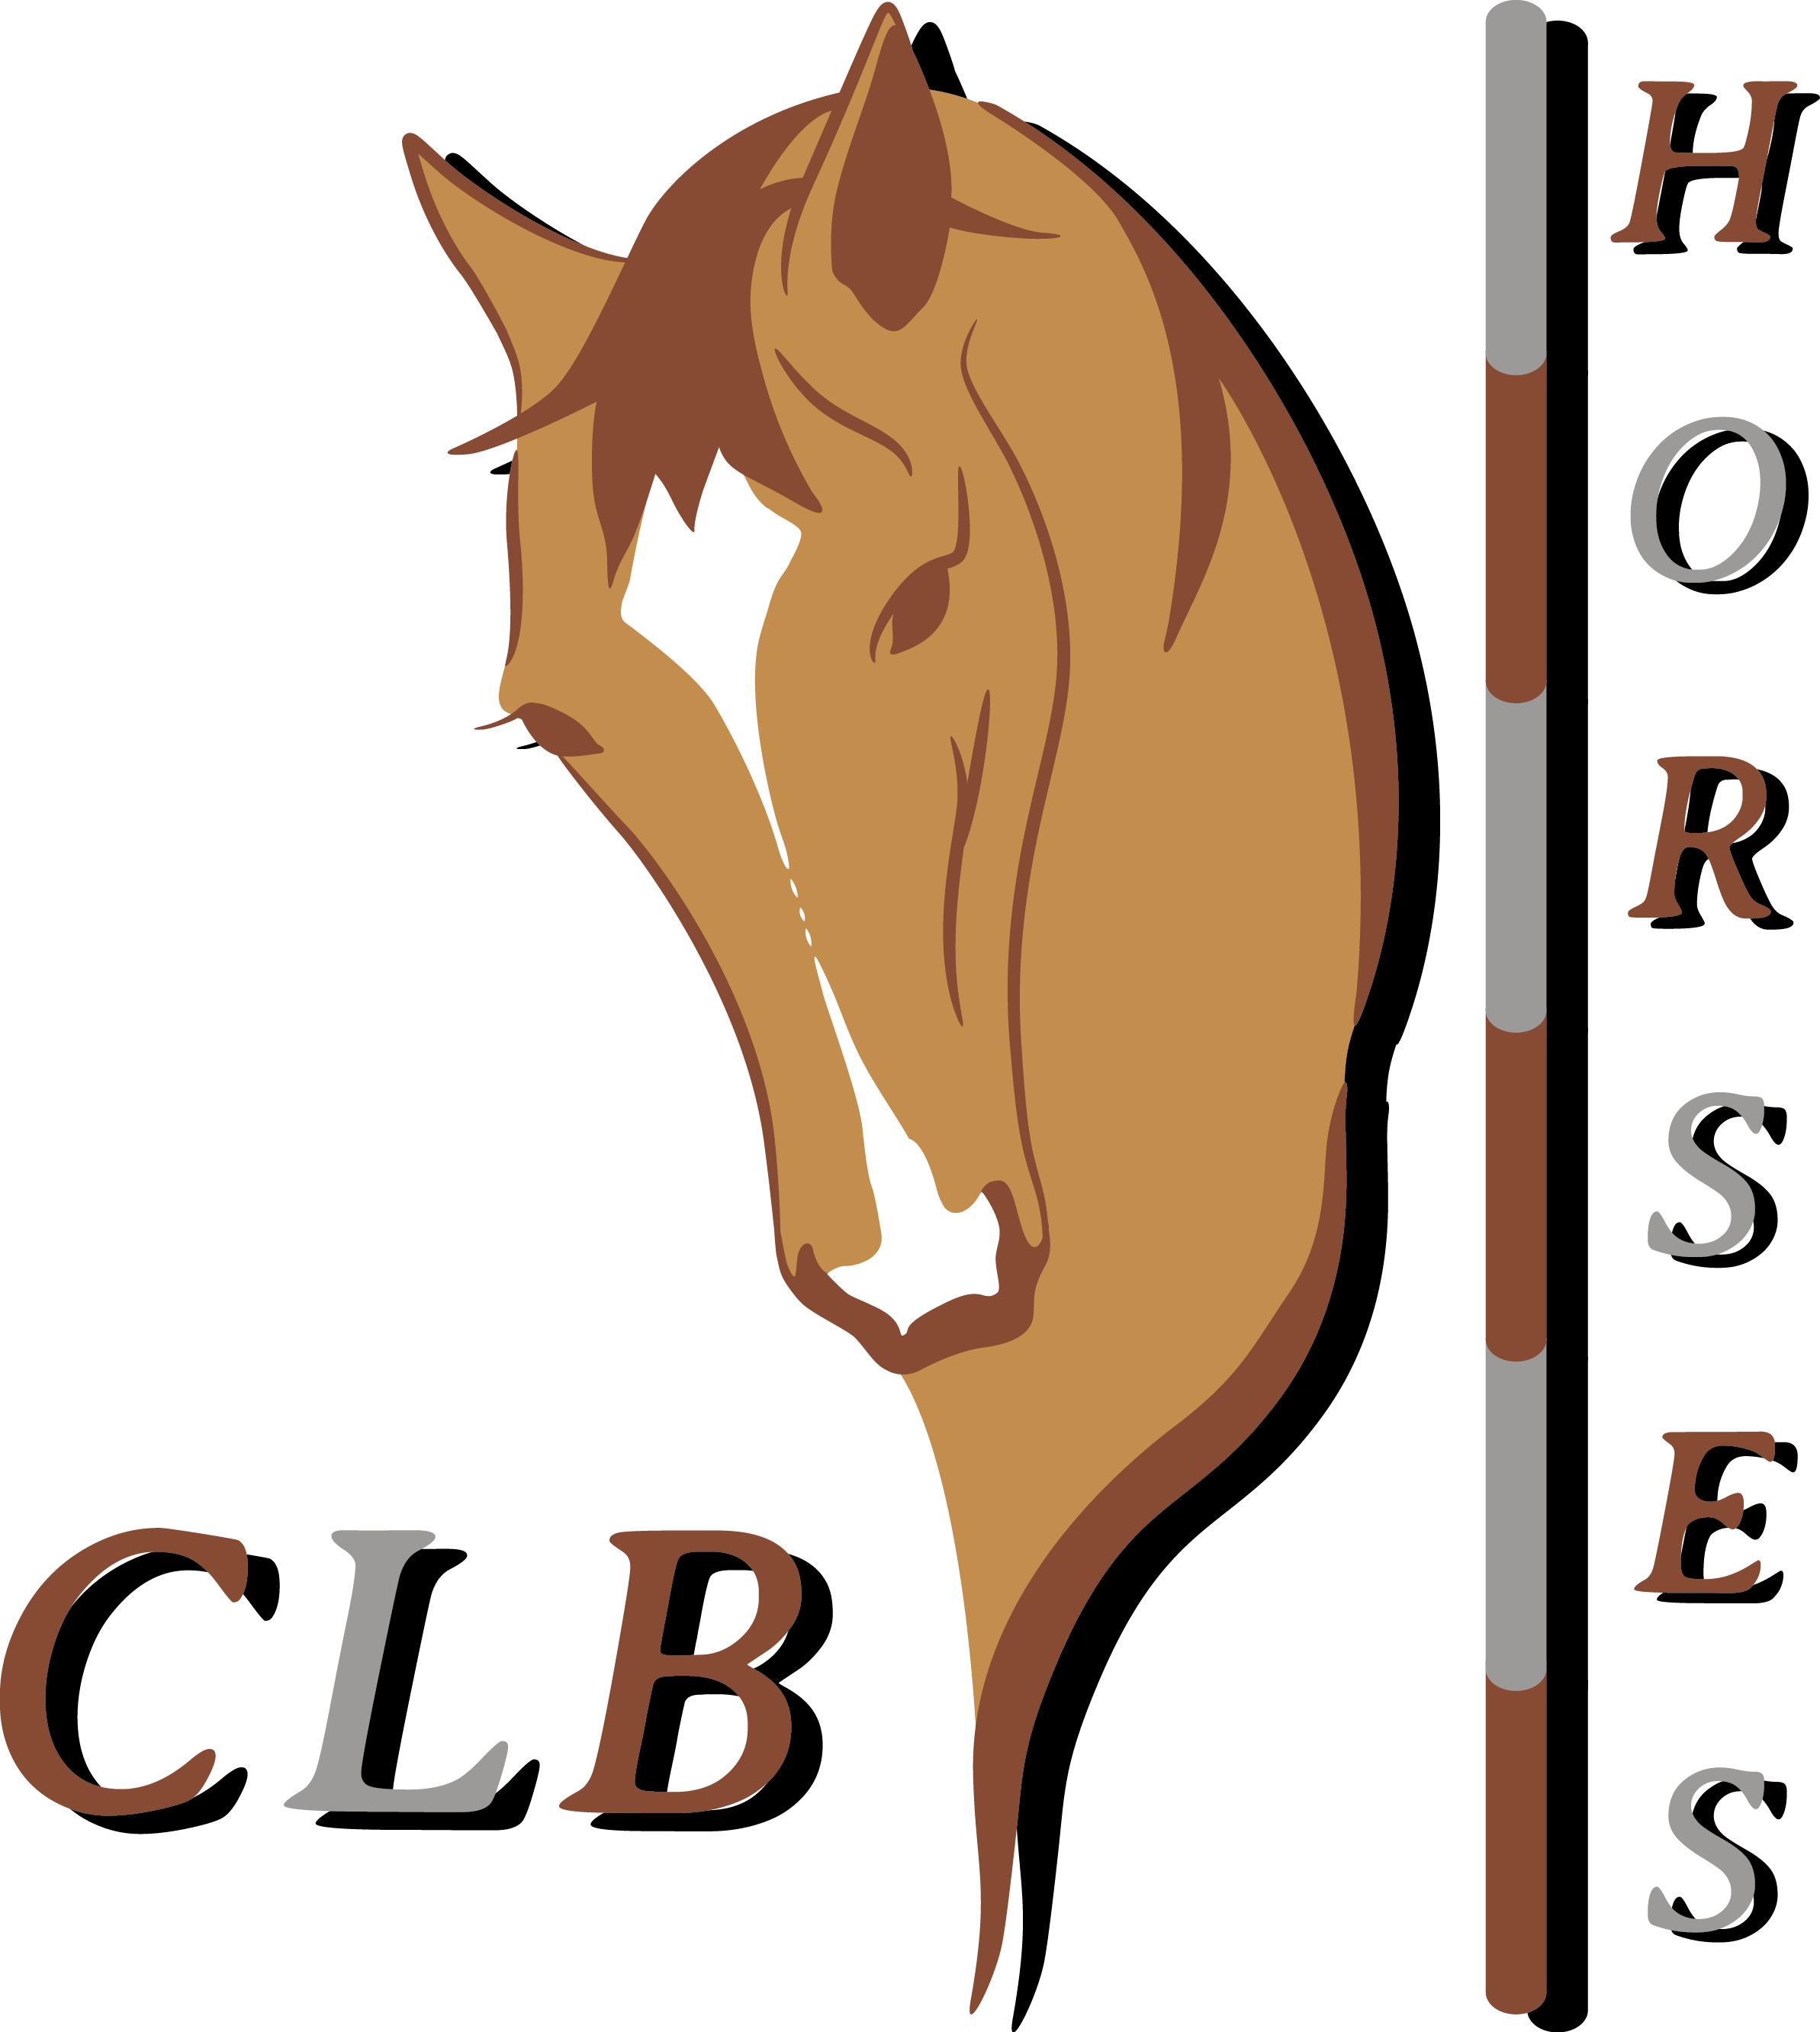 Clb Horses - La Passione - - Mane (2386x2664)